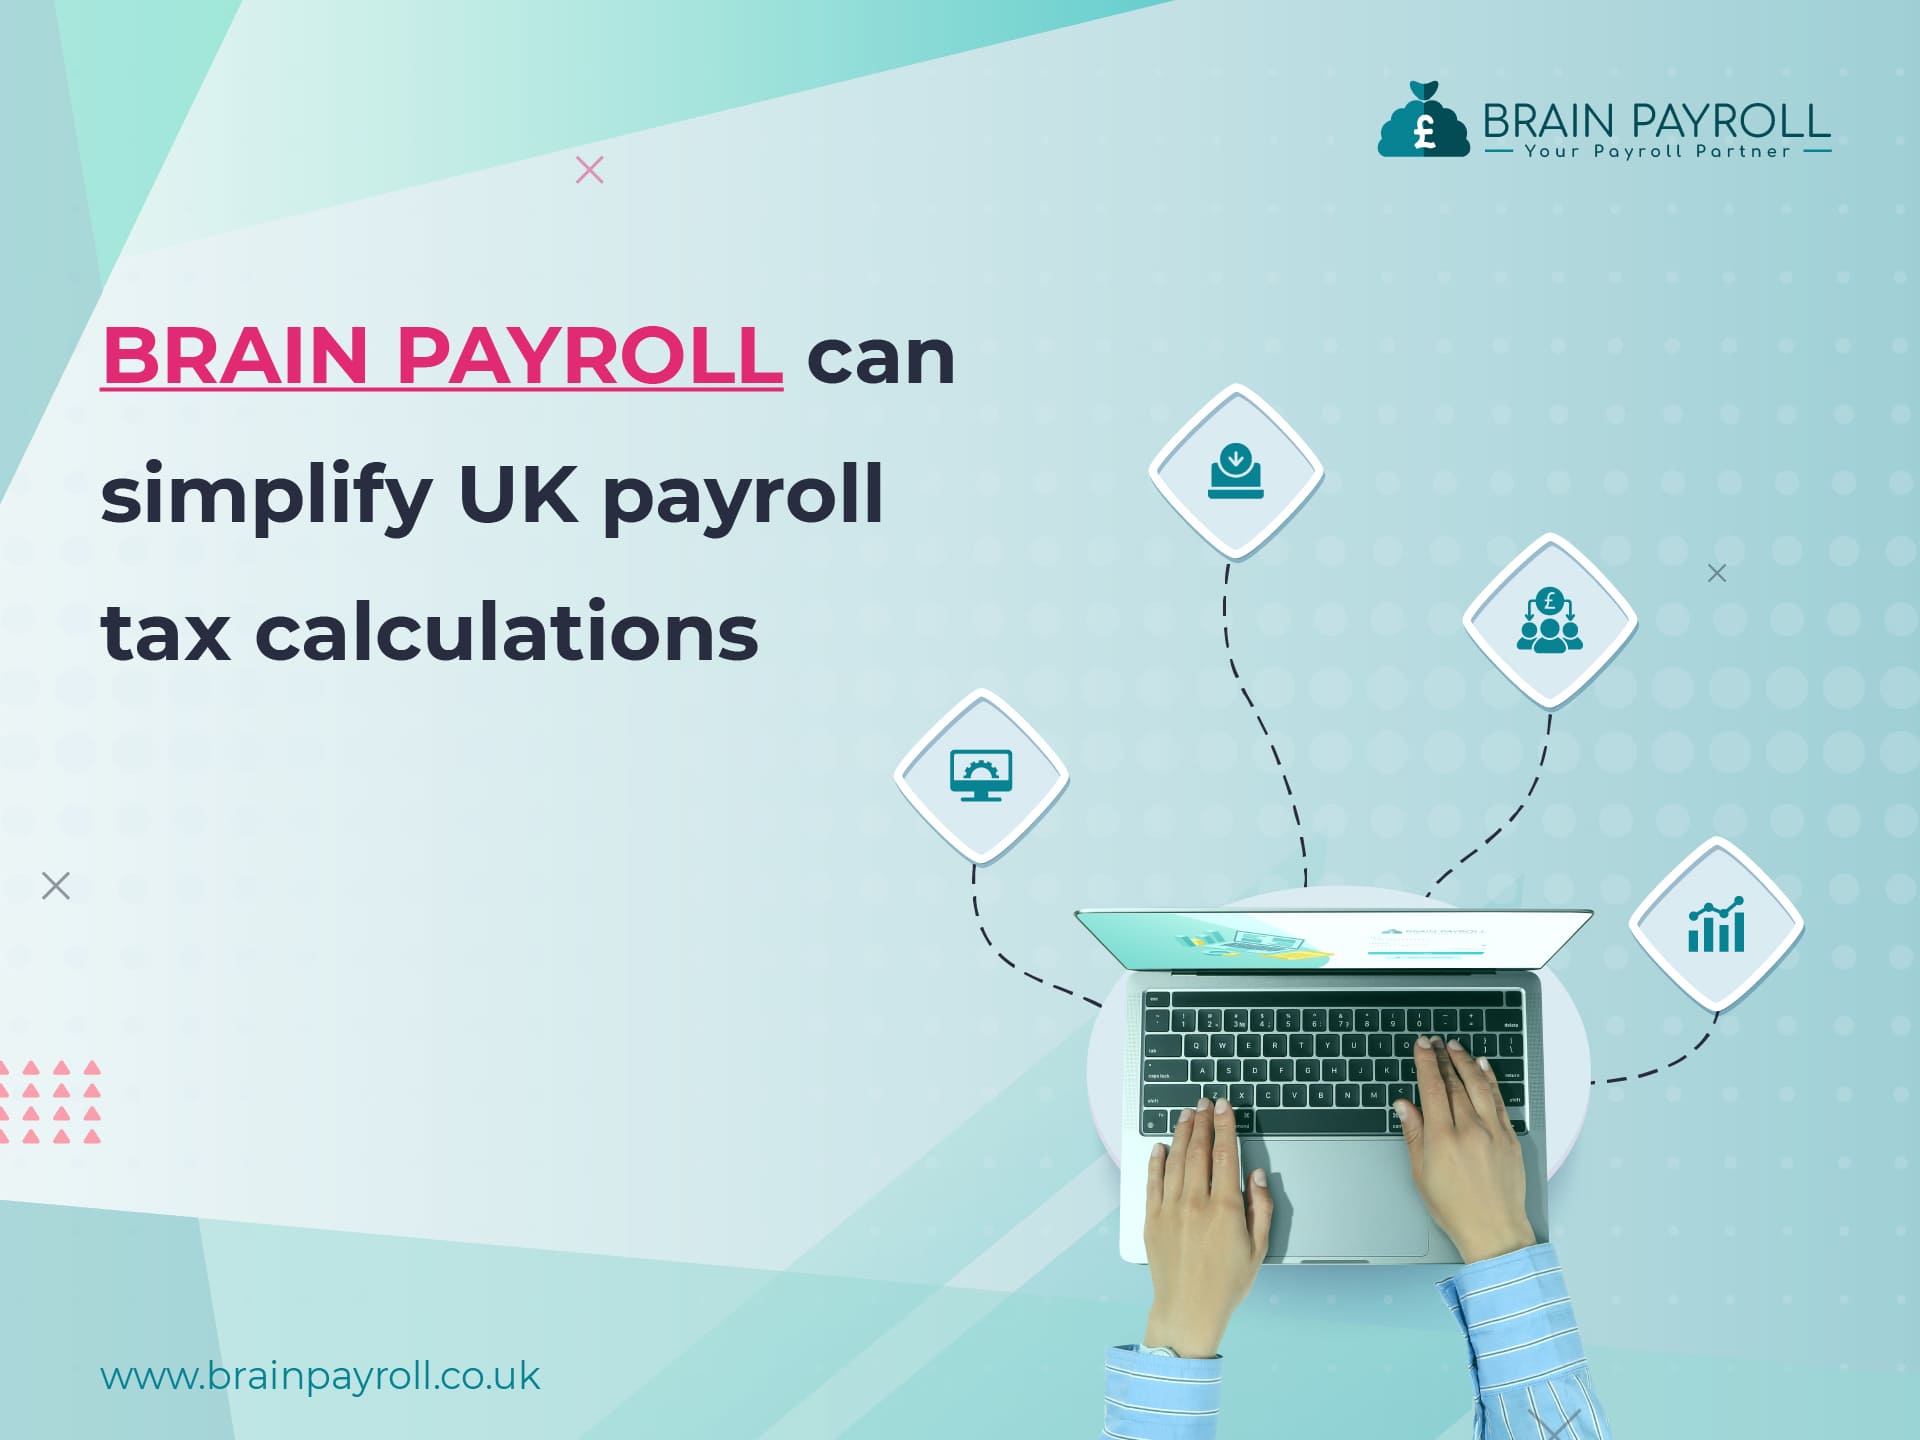 How Brain Payroll Can Simplify UK Payroll Tax Calculations